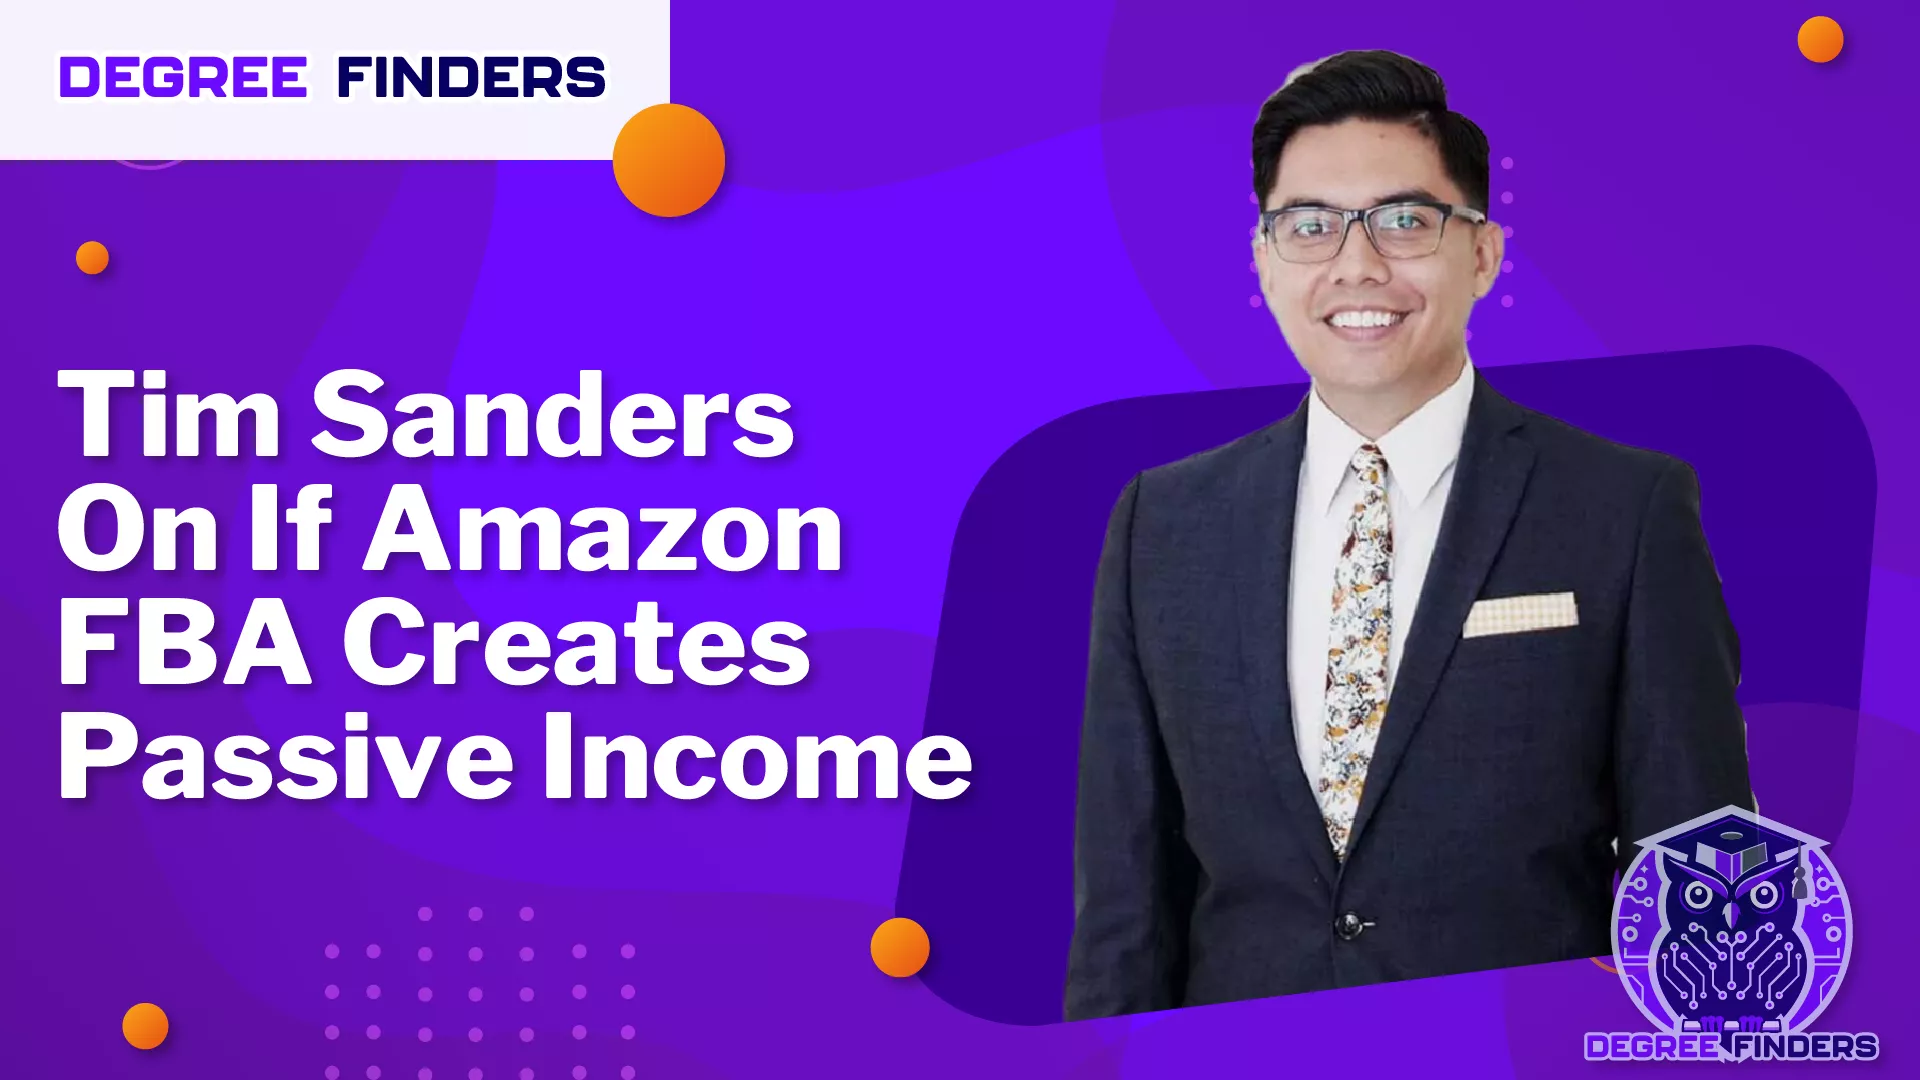 Tim Sanders On If Amazon FBA Creates Passive Income